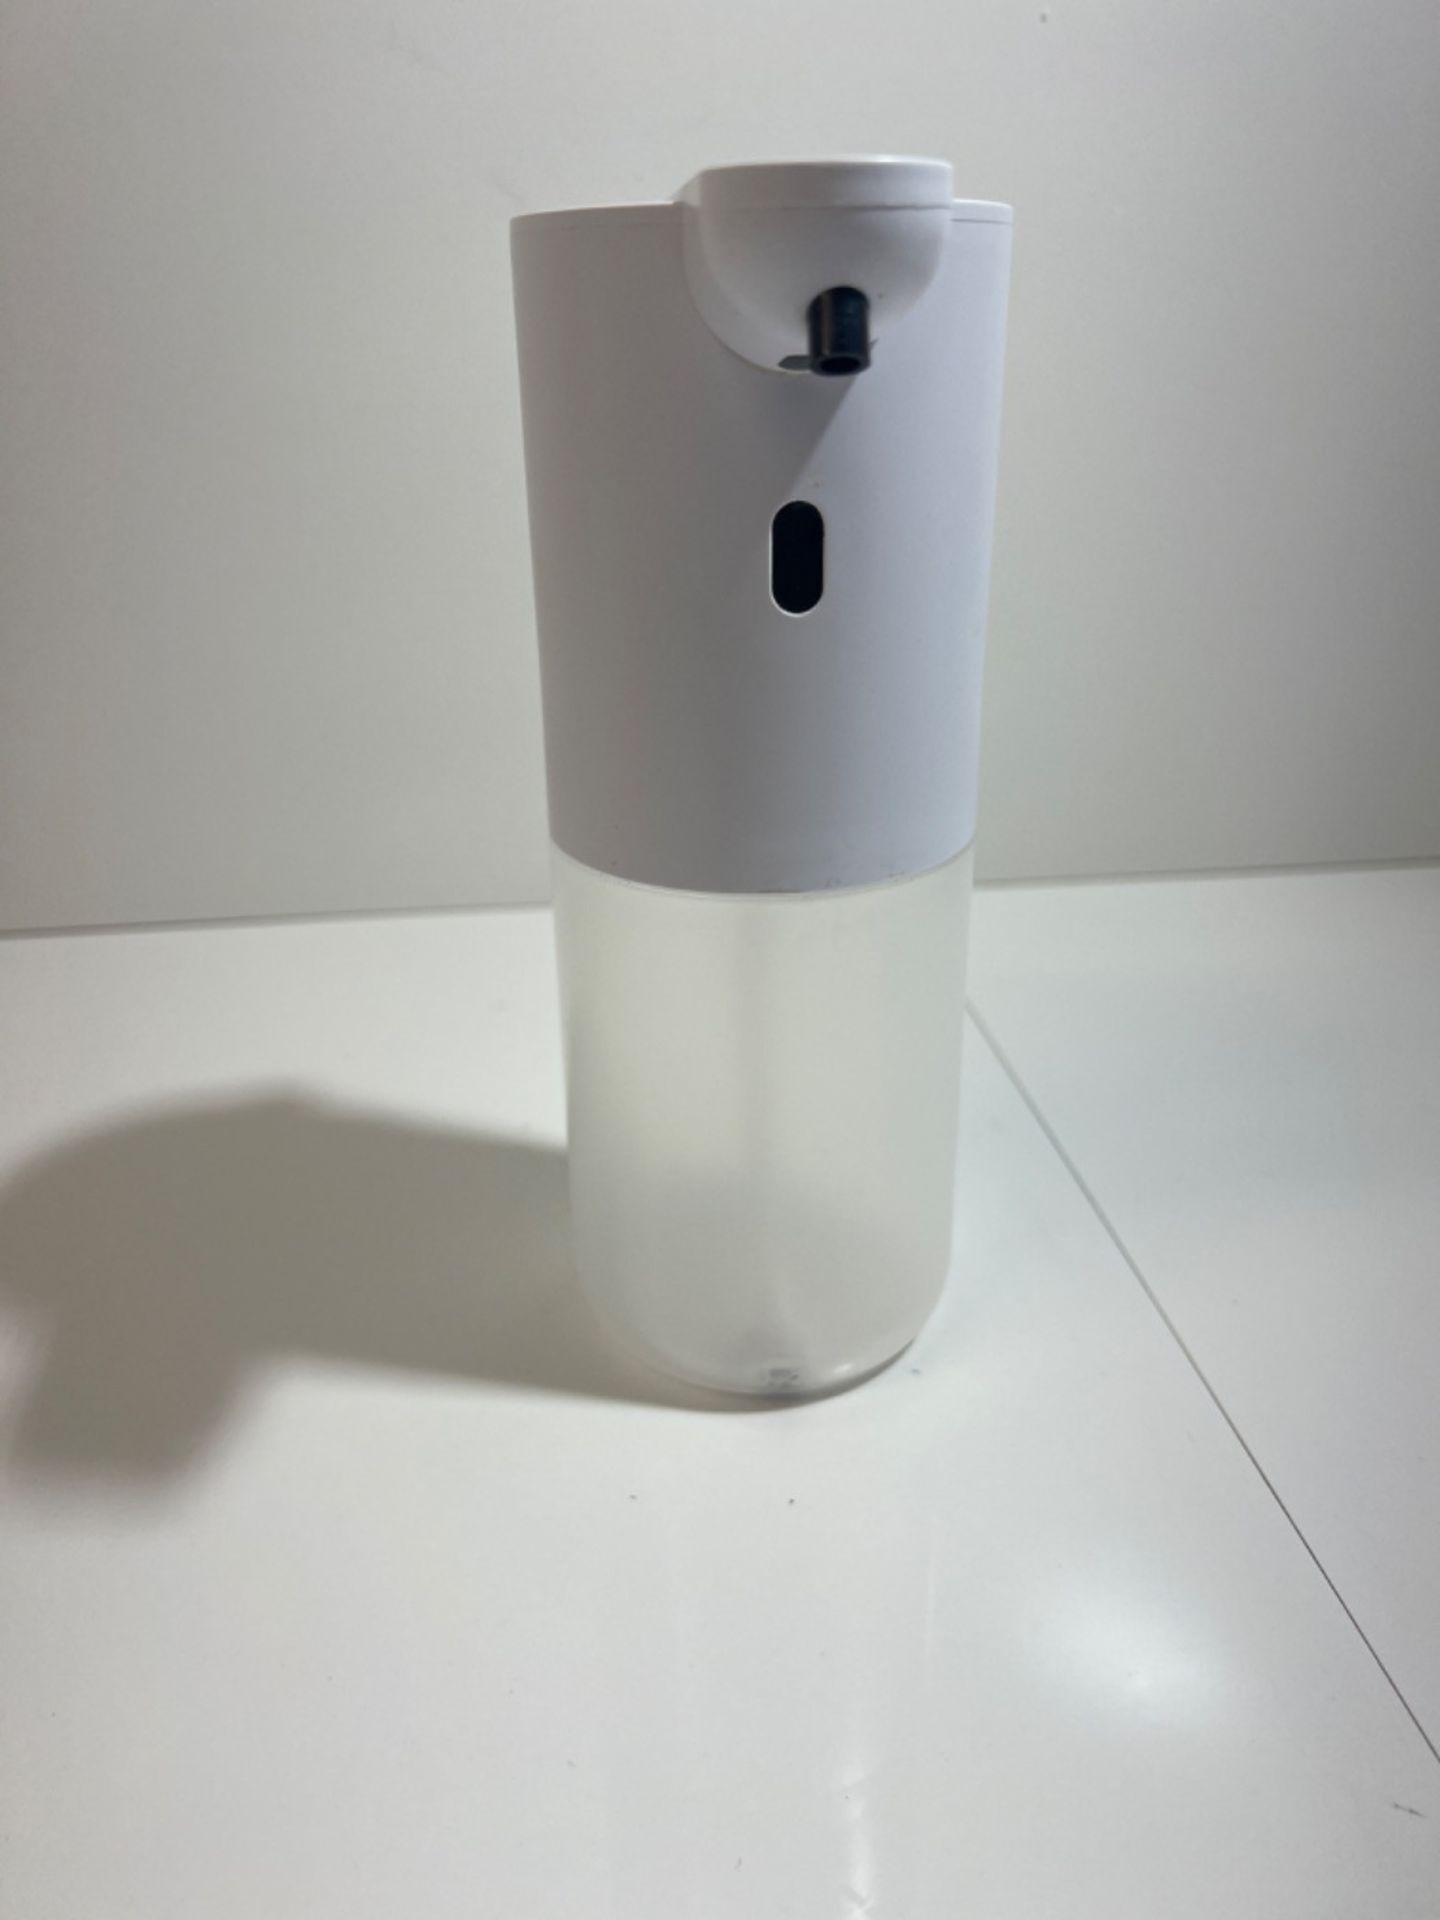 Foam Automatic Soap Dispenser Electric, Laopao No-Touch Sensor Soap Dispenser Touchless Wall Moun... - Image 3 of 3